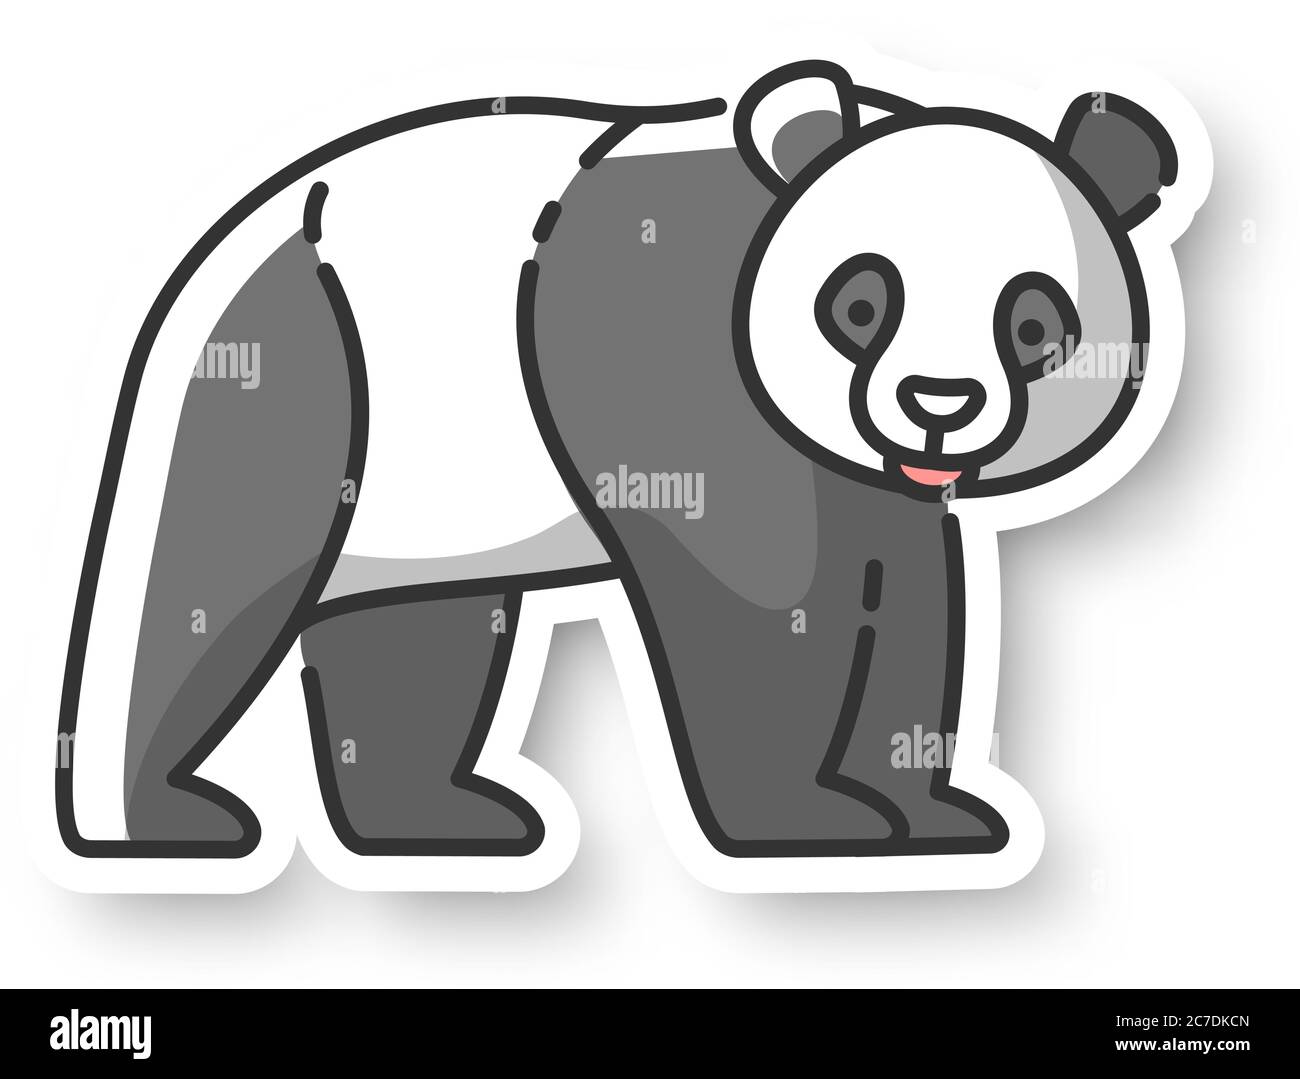 Printable sticker Black and White Stock Photos & Images - Alamy